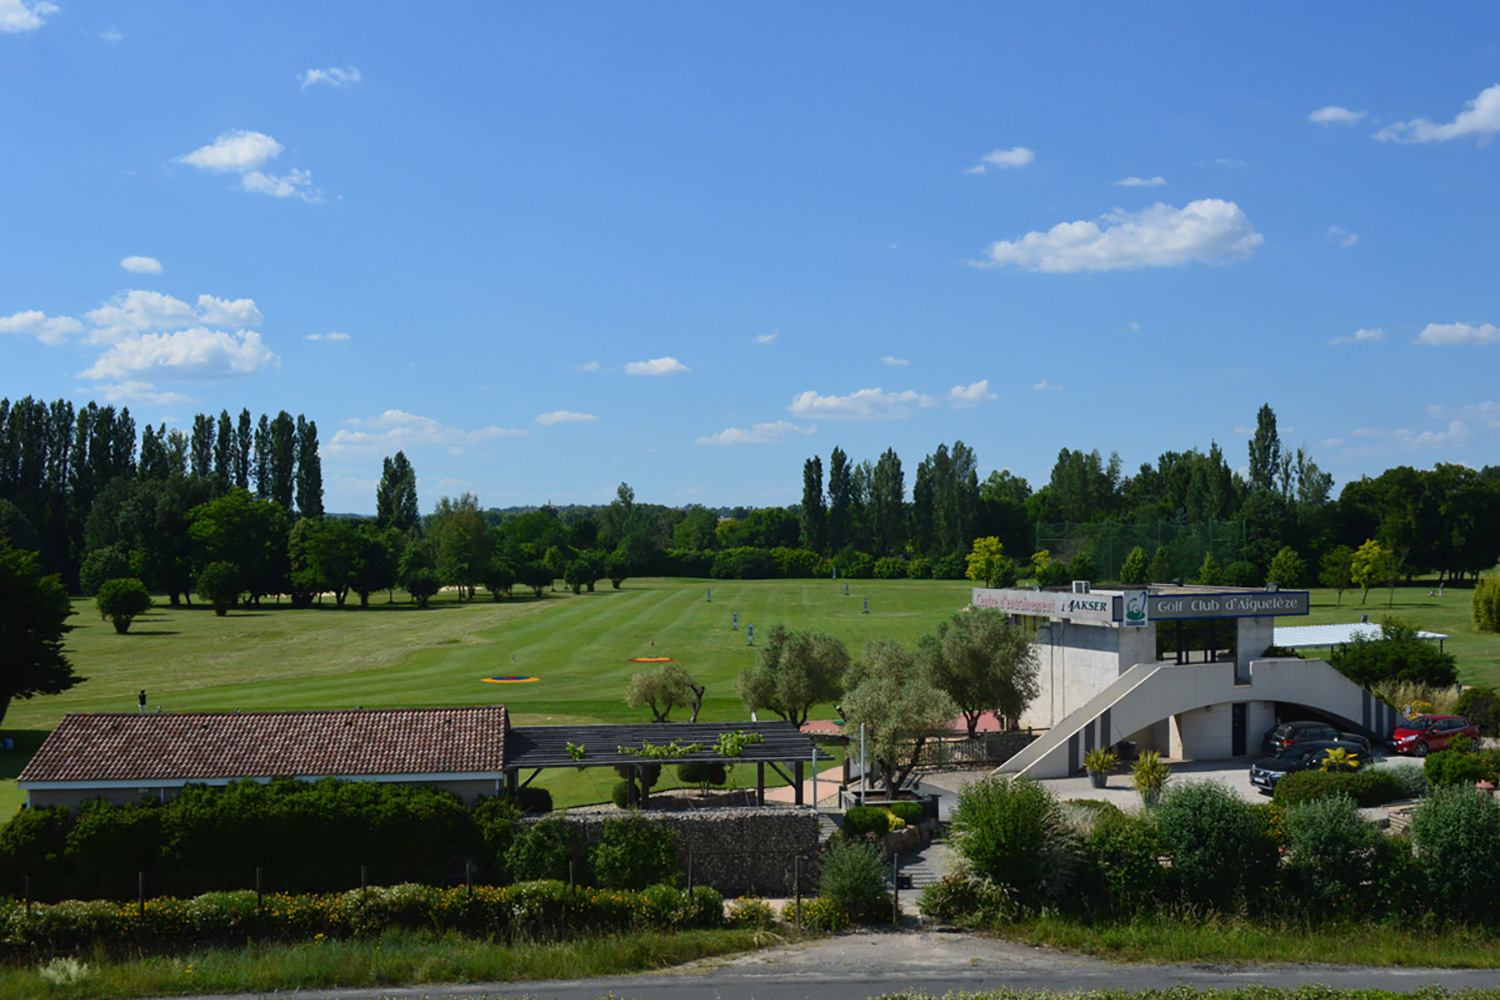 9-hole golf course in Aiguelèze